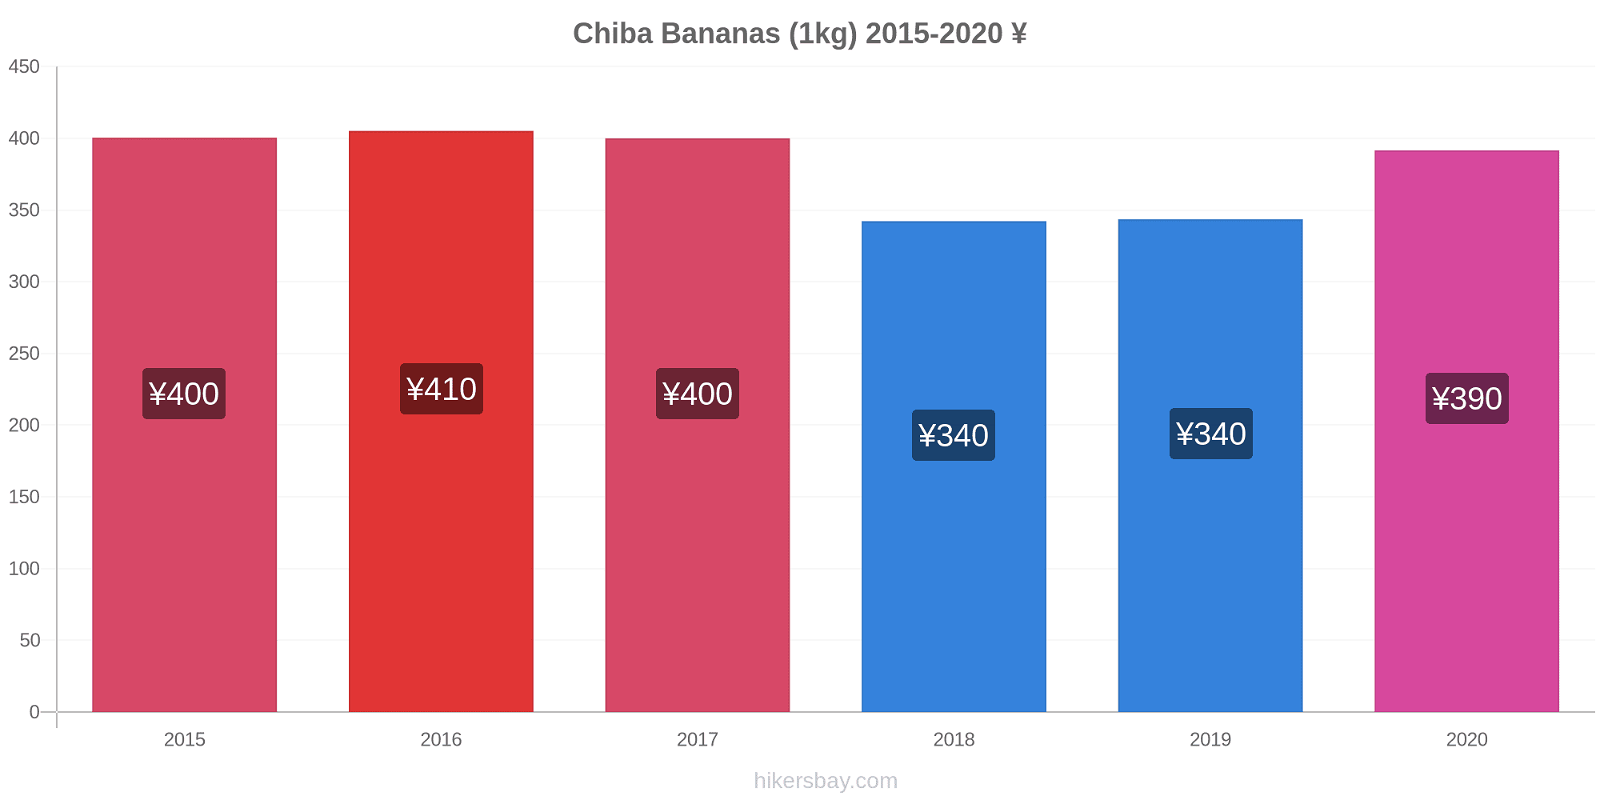 Chiba price changes Bananas (1kg) hikersbay.com